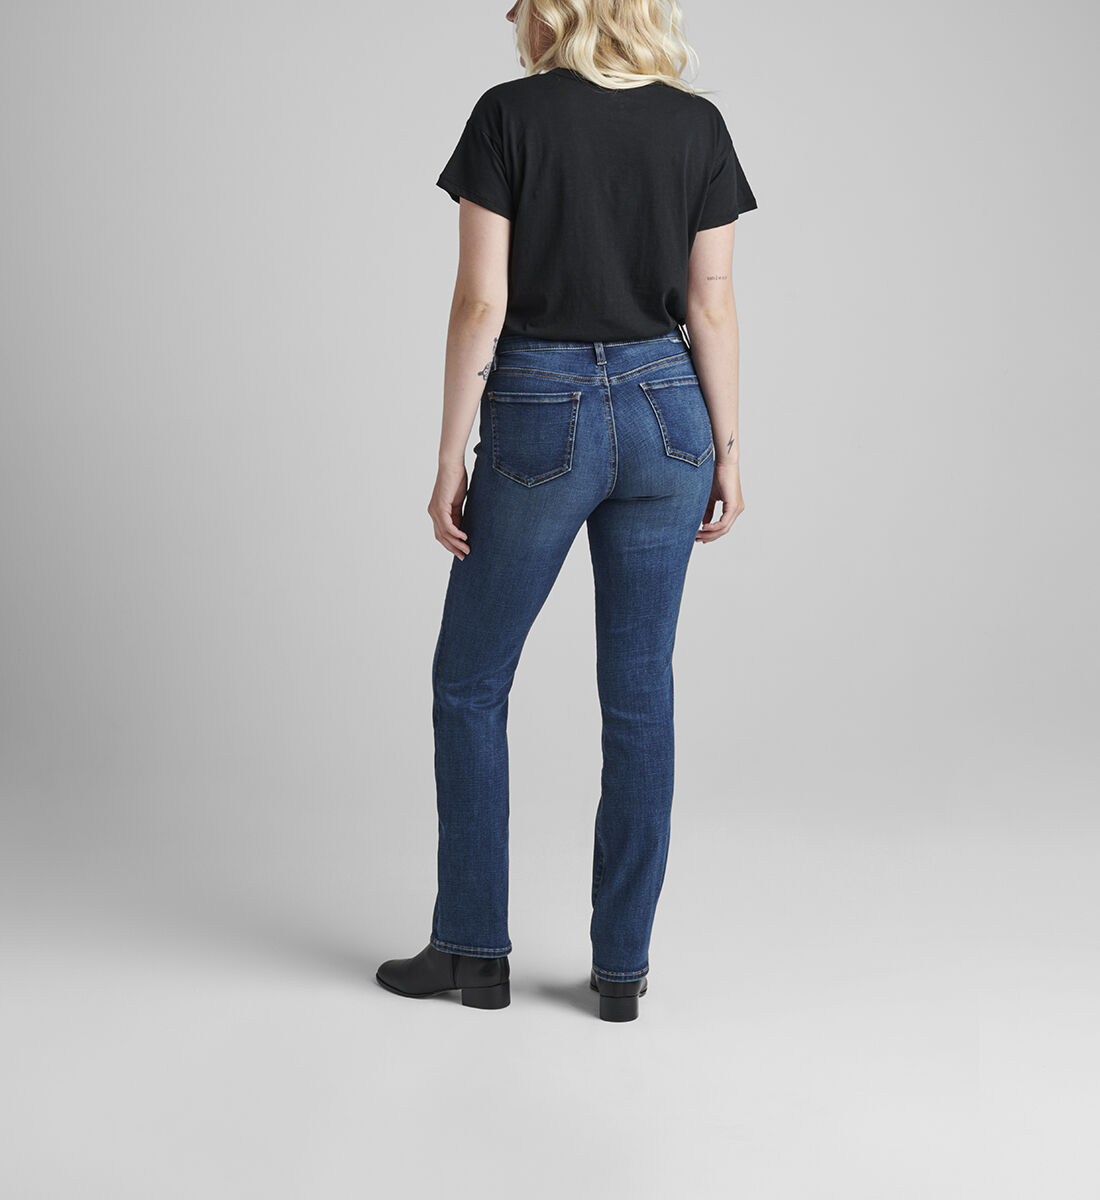 Eloise Mid Rise Bootcut Jeans Petite Back